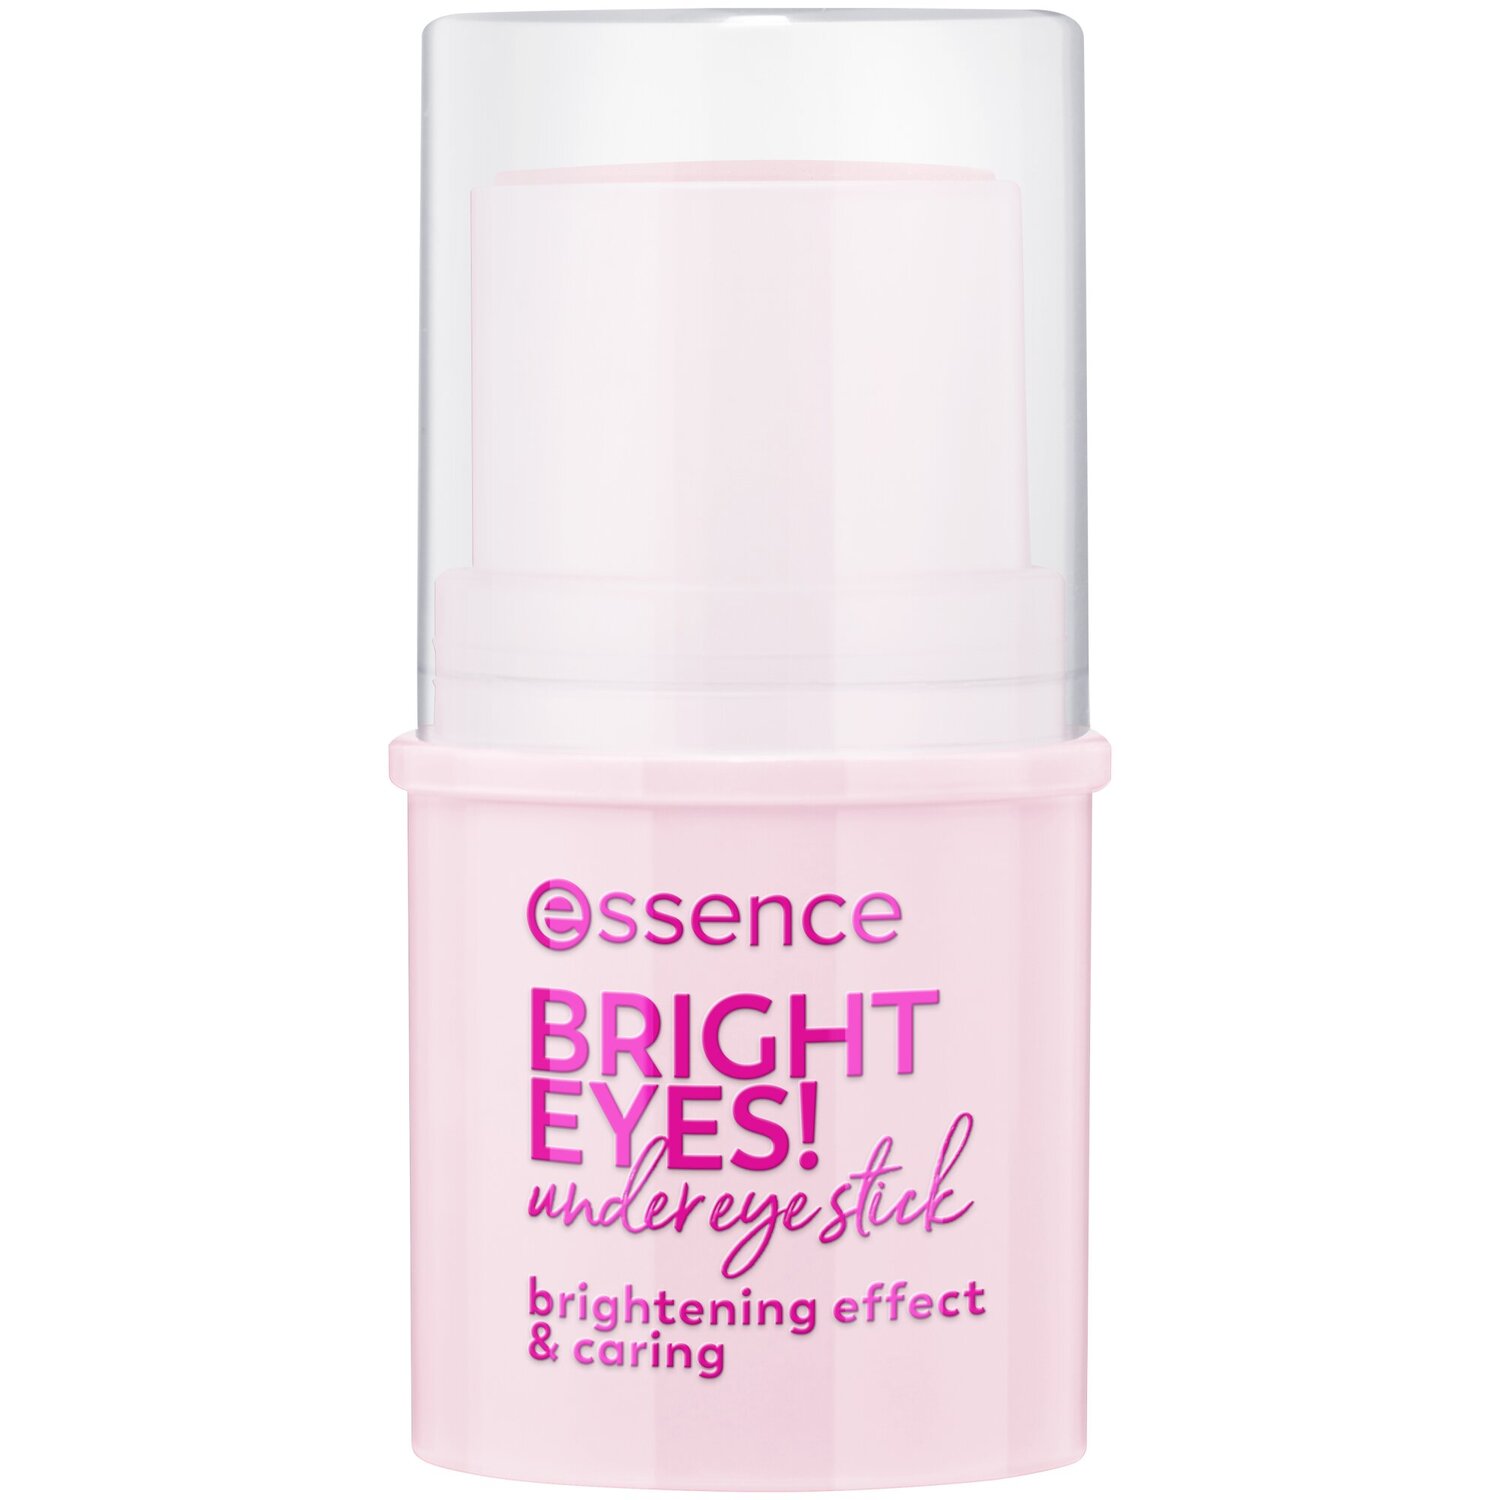 essence Bright Eyes Under-Eye Stick - Pink Image 2